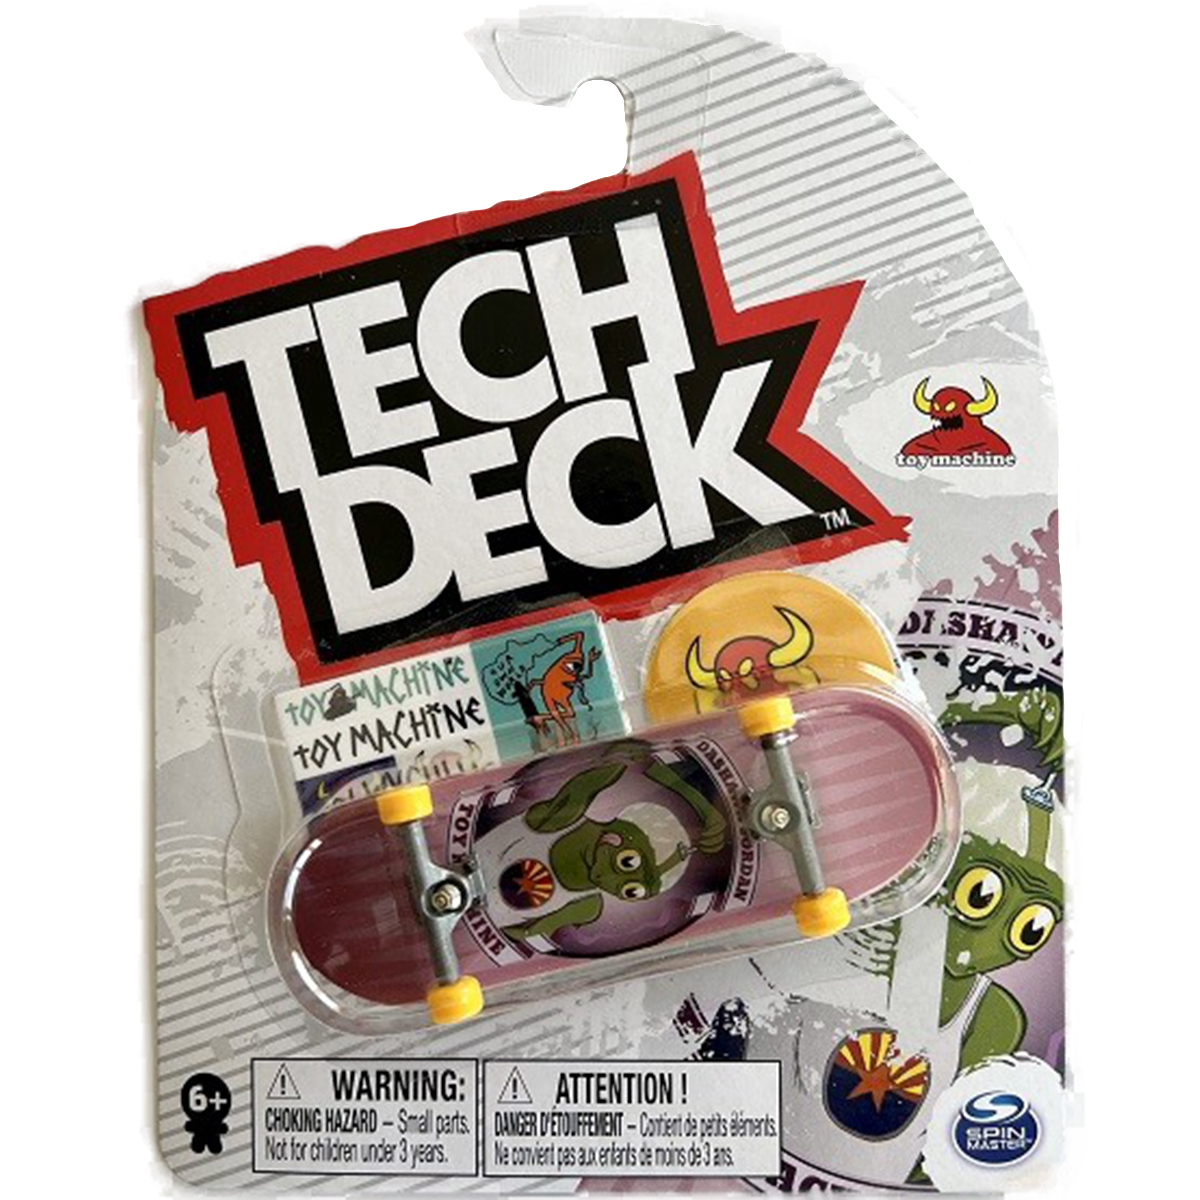 Mini placa skateboard tech deck, toy machine 20136155